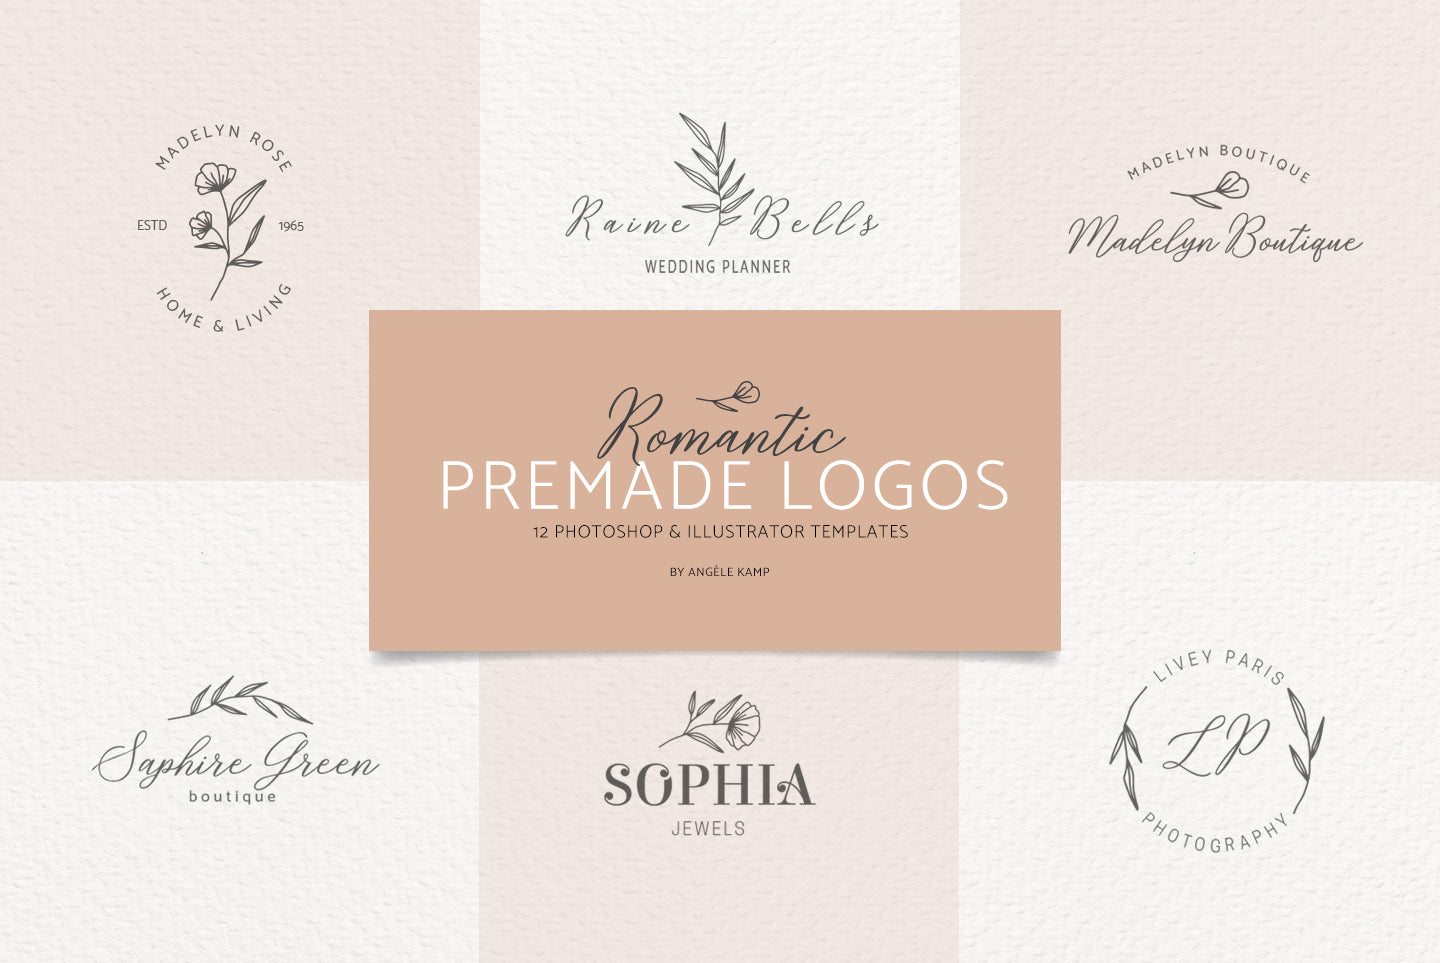 Romantic Premade Logos